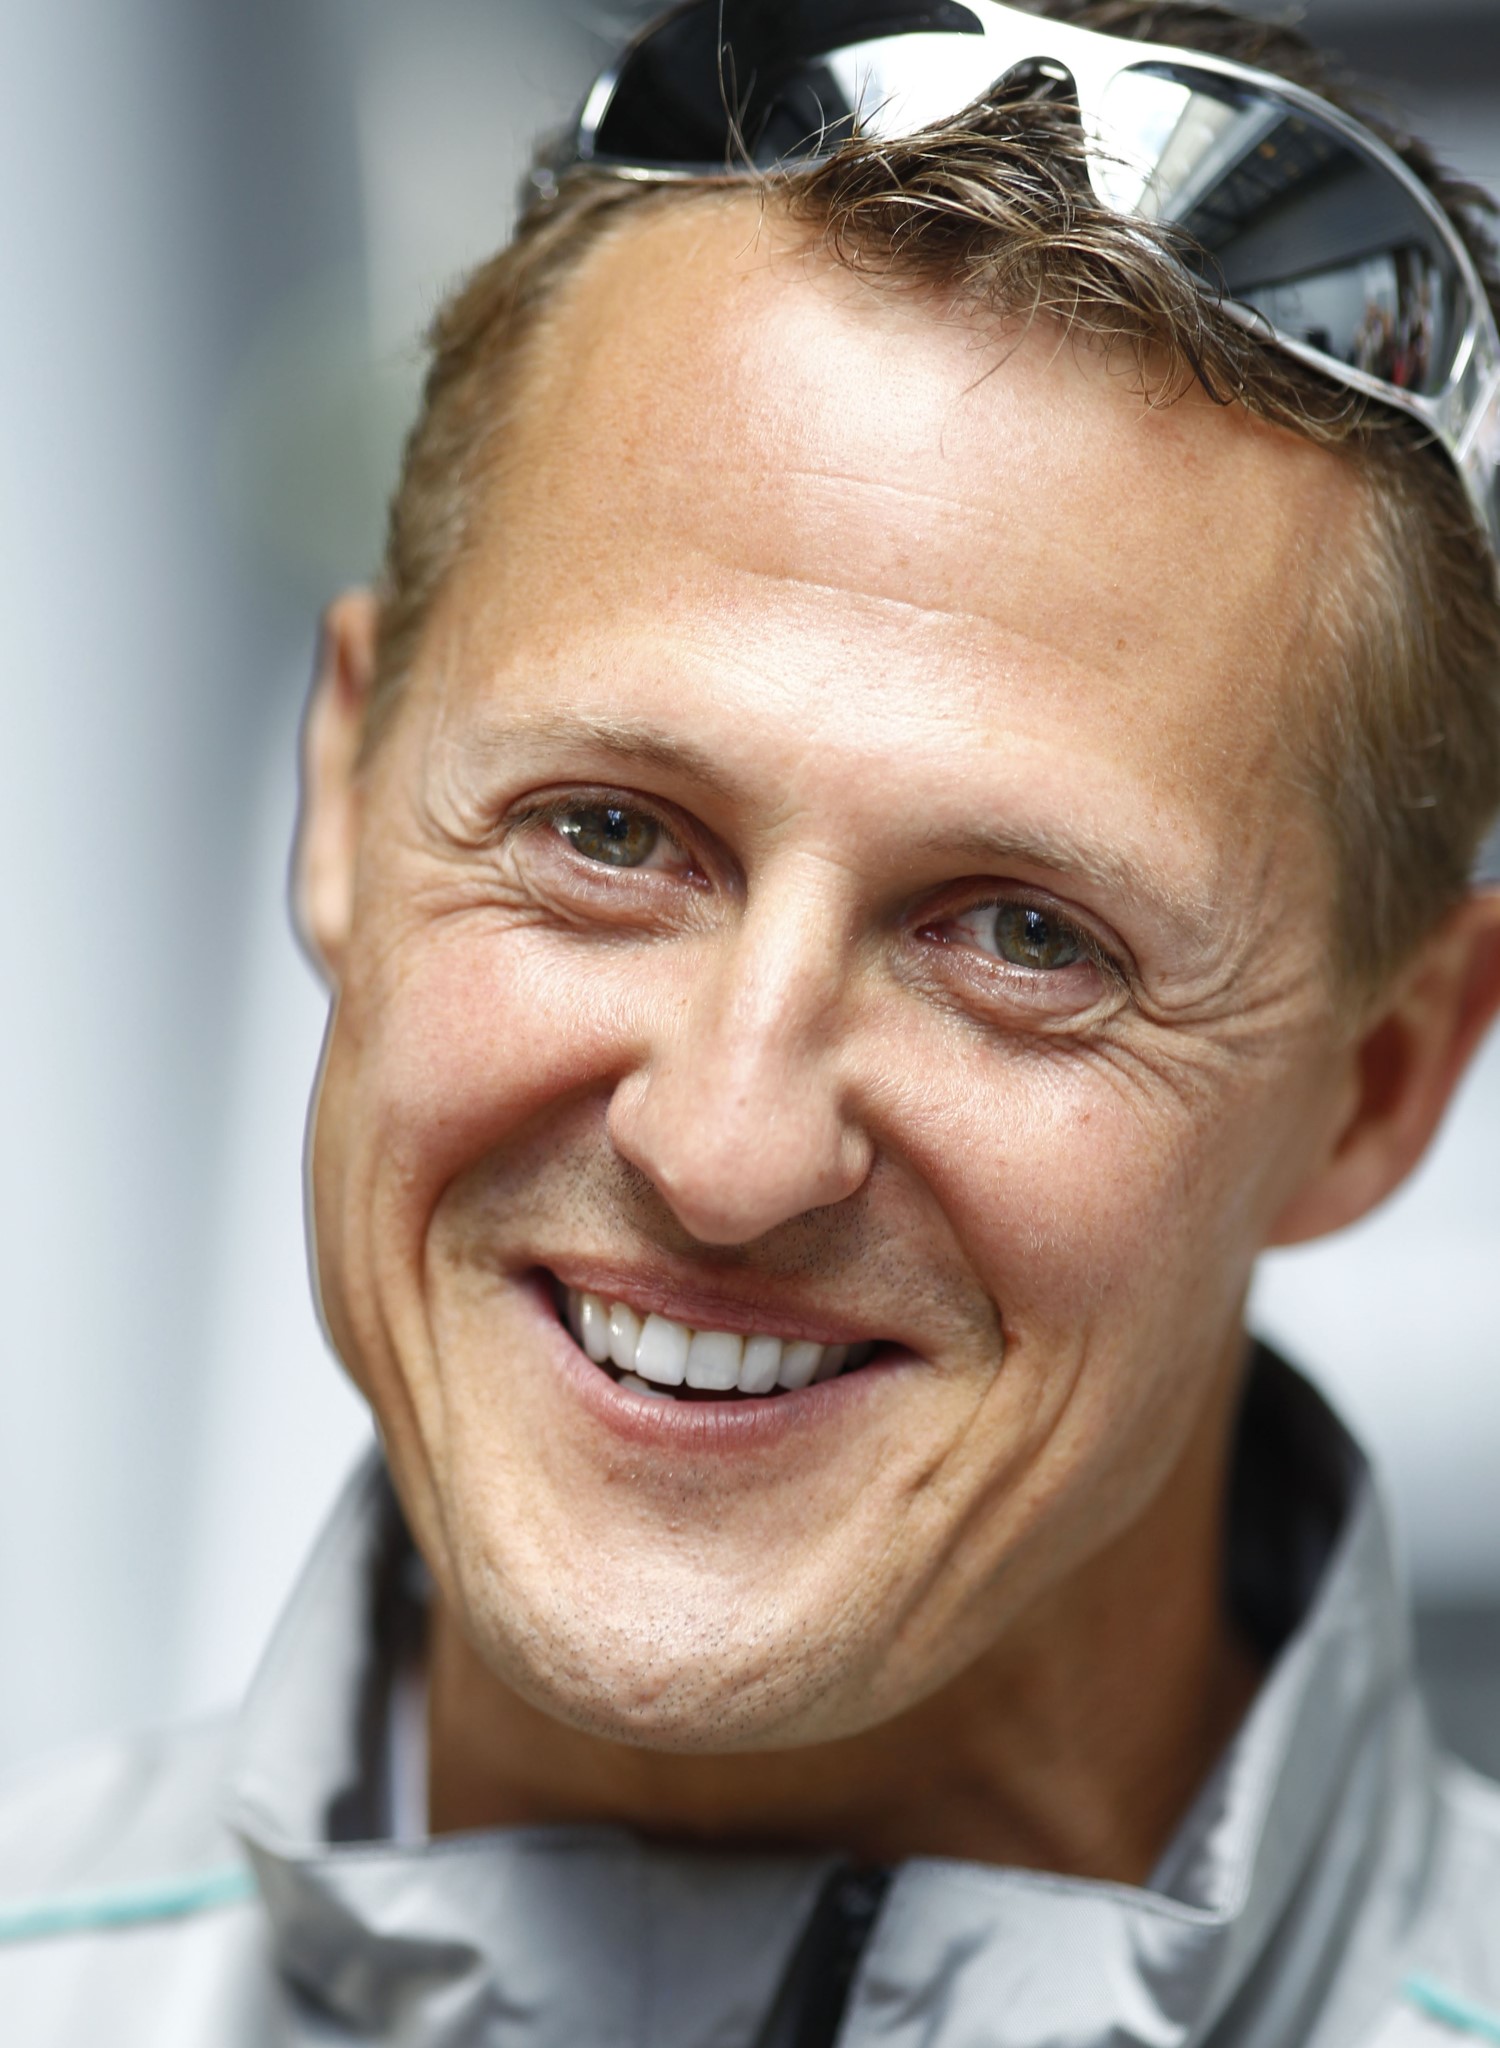 Michael Schumacher - 2012 Belgian Grand Prix - Wolfgang Wilhelm/Mercedes-AMG PETRONAS F1 Team